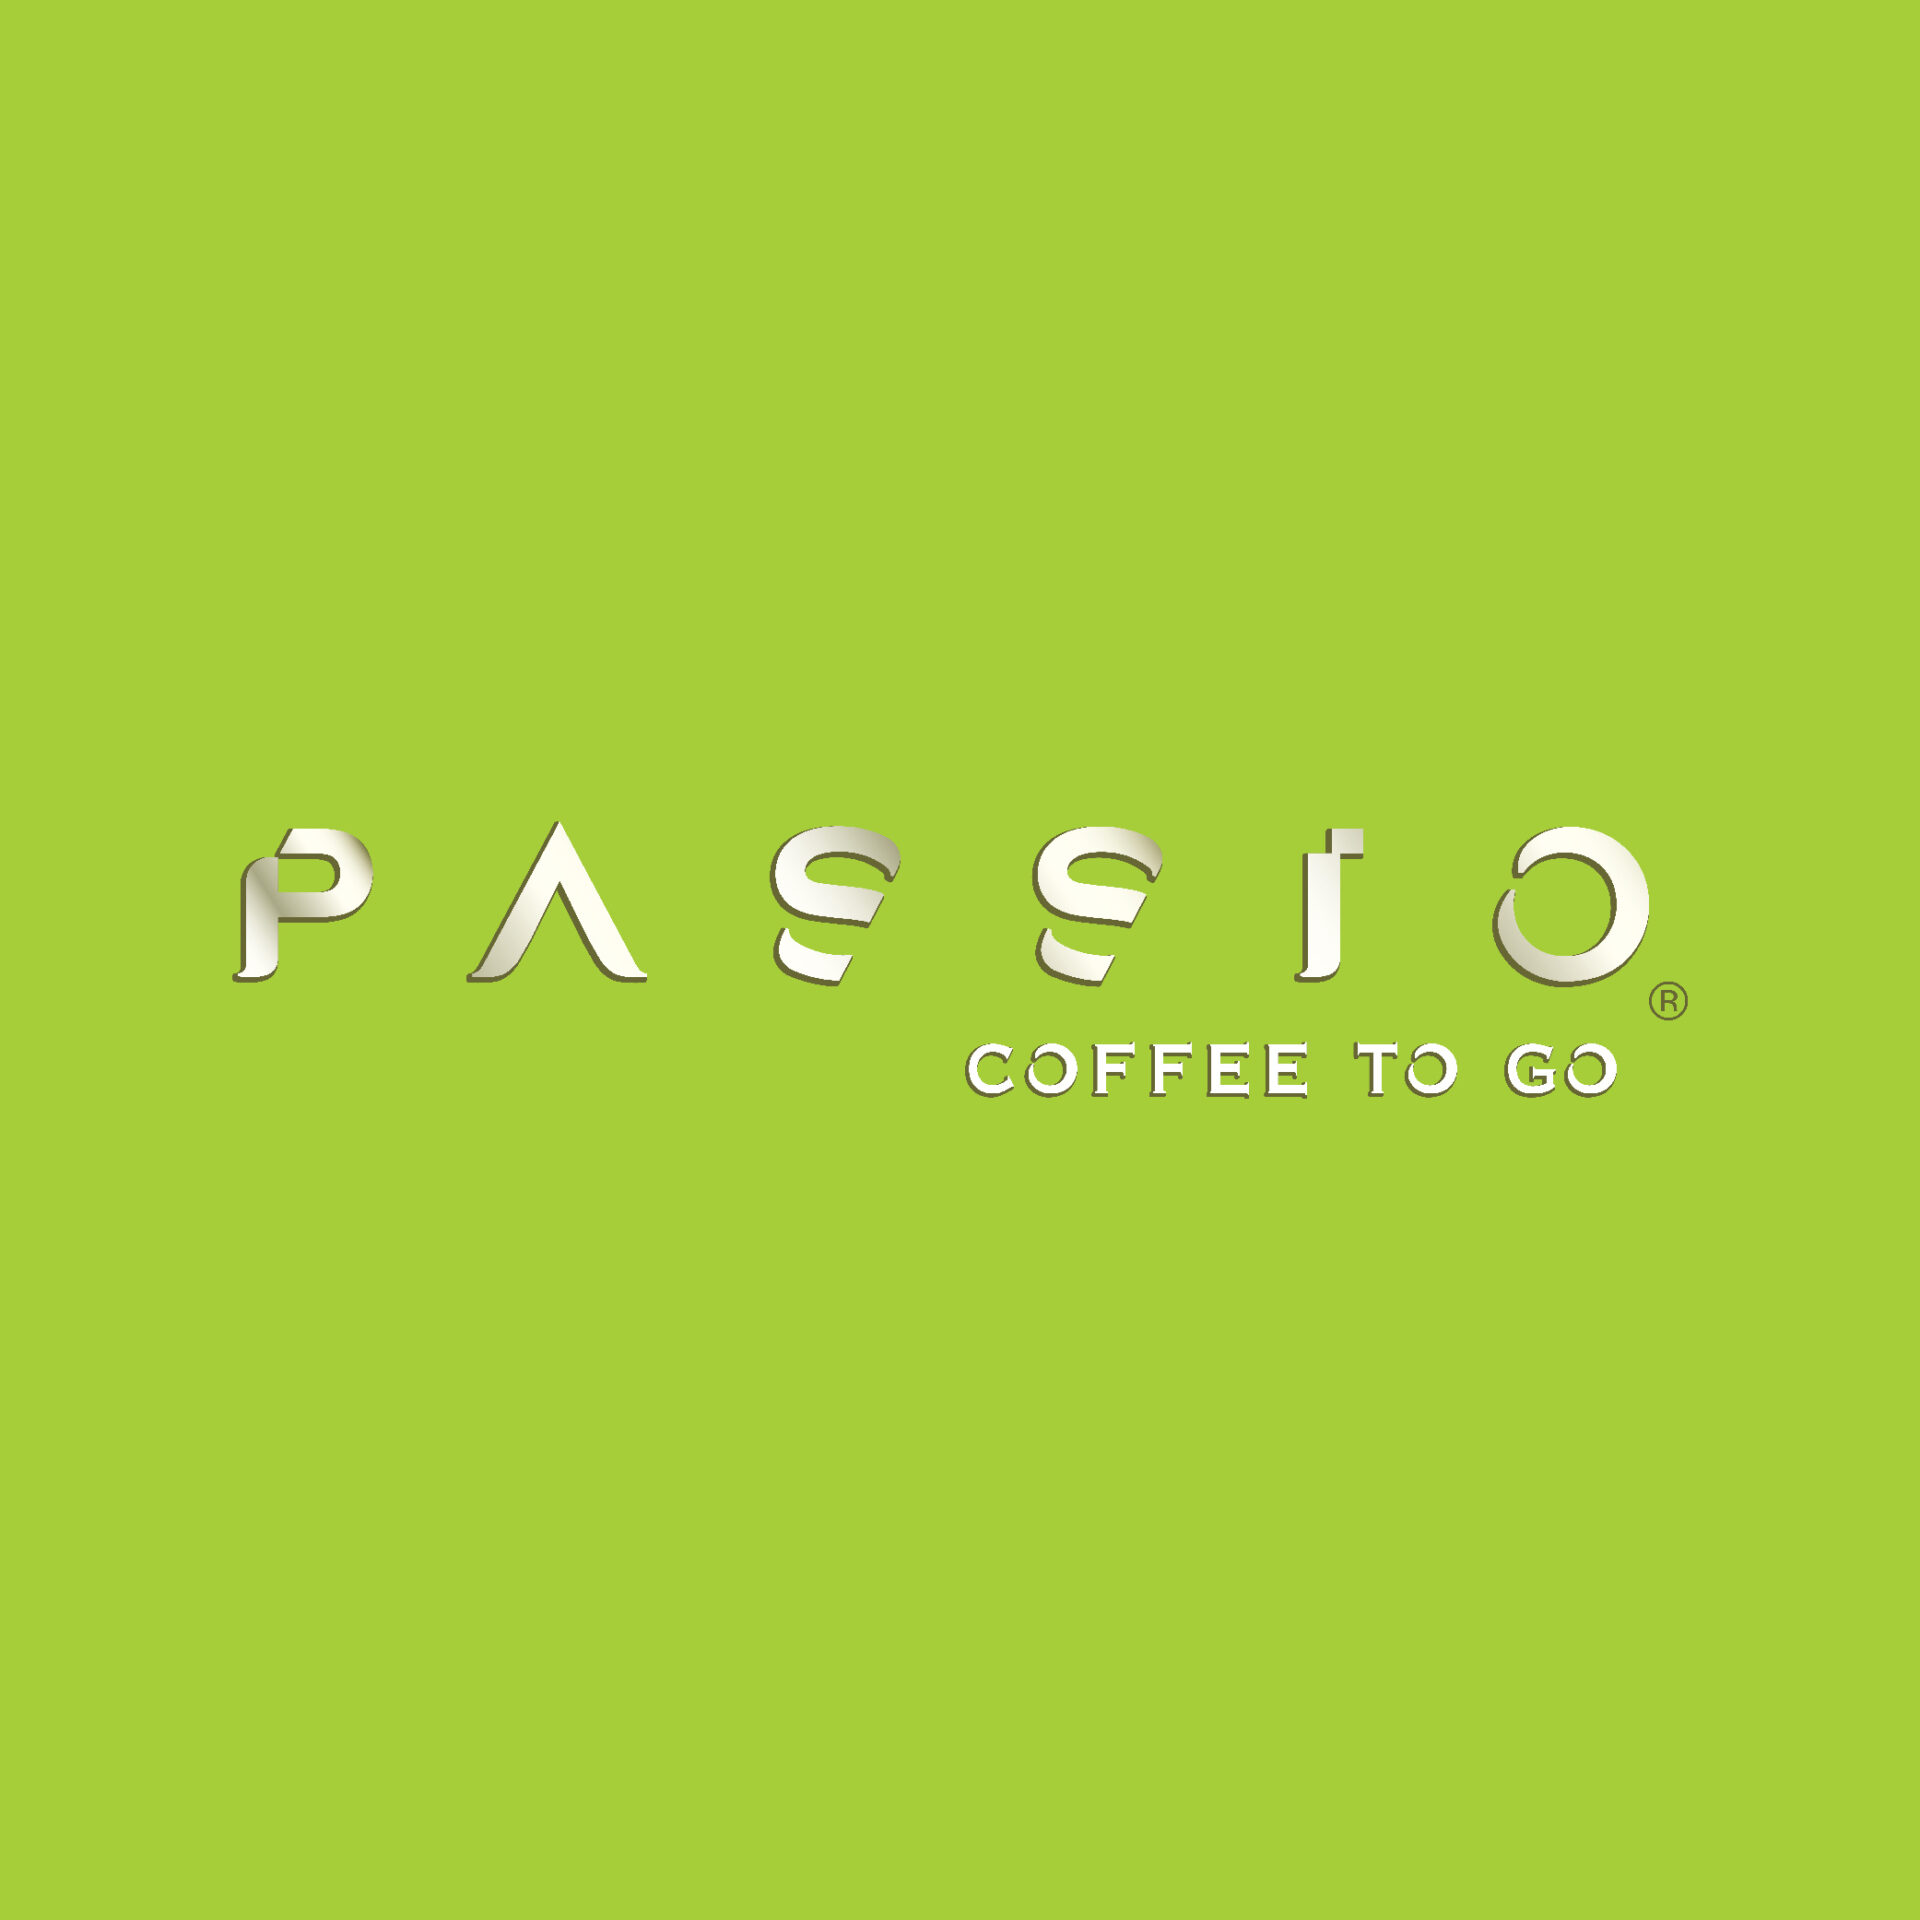 Passio logo 02 scaled